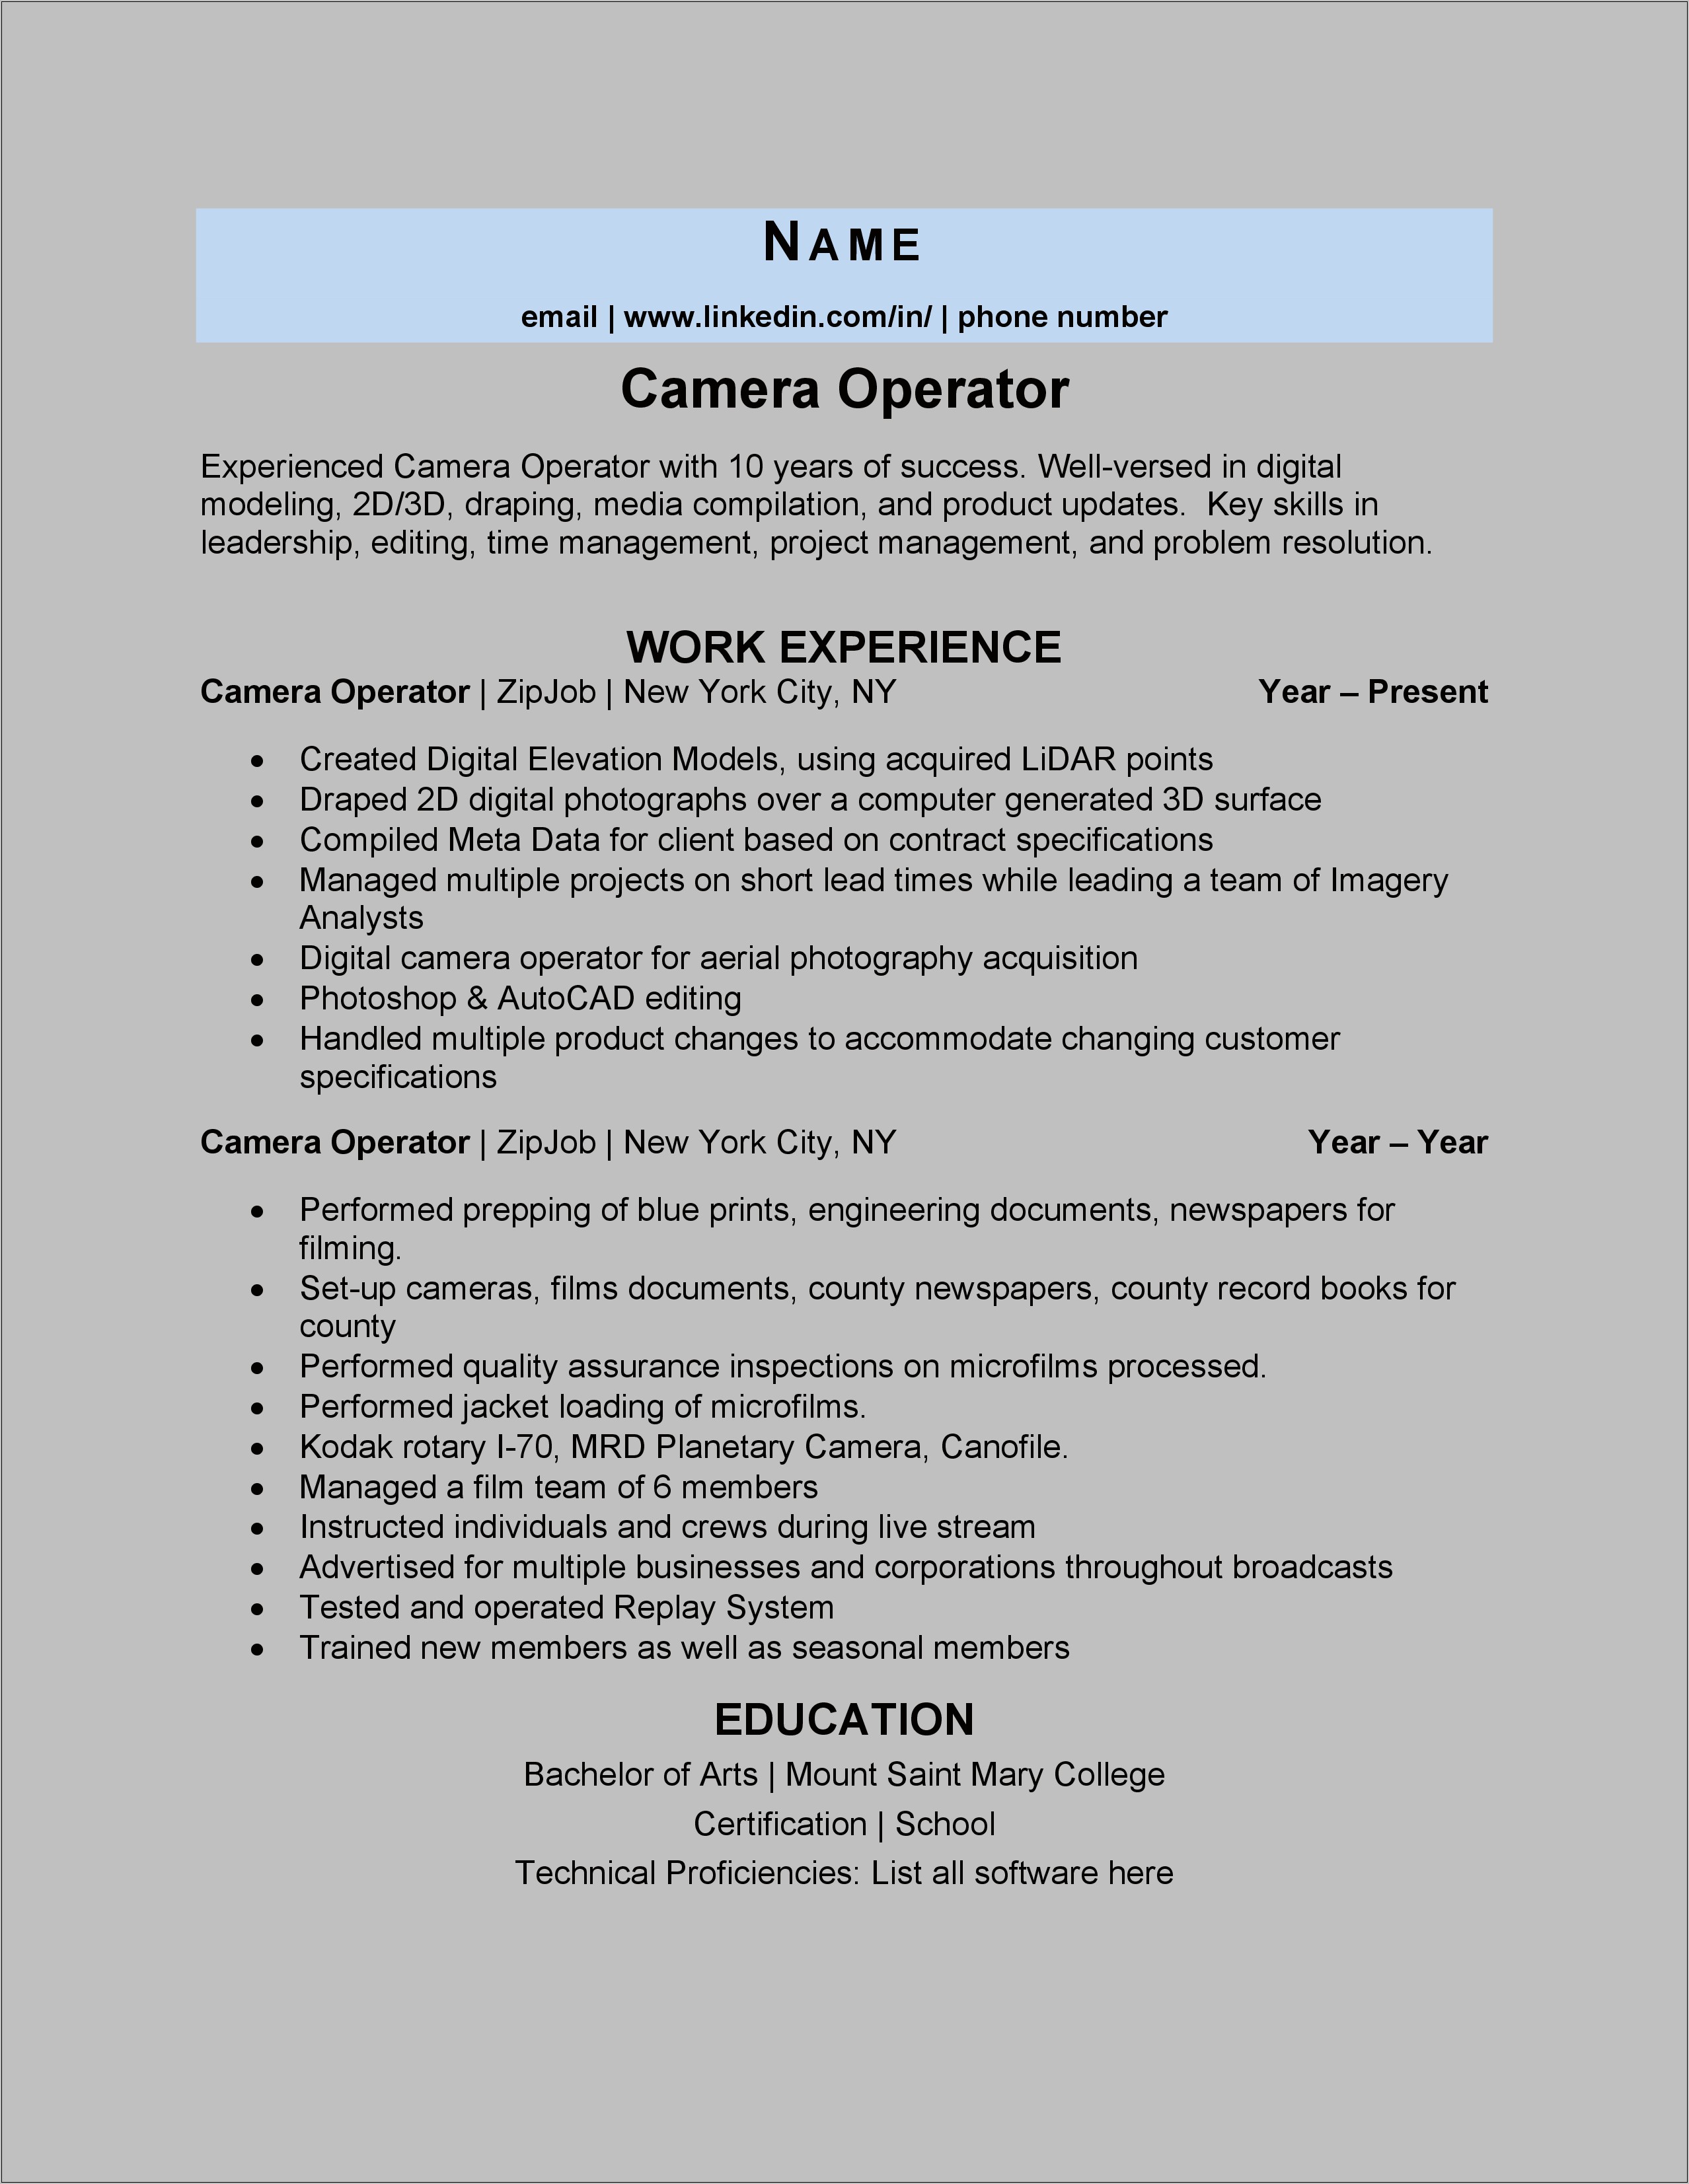 Sample Resume For Camera Operator